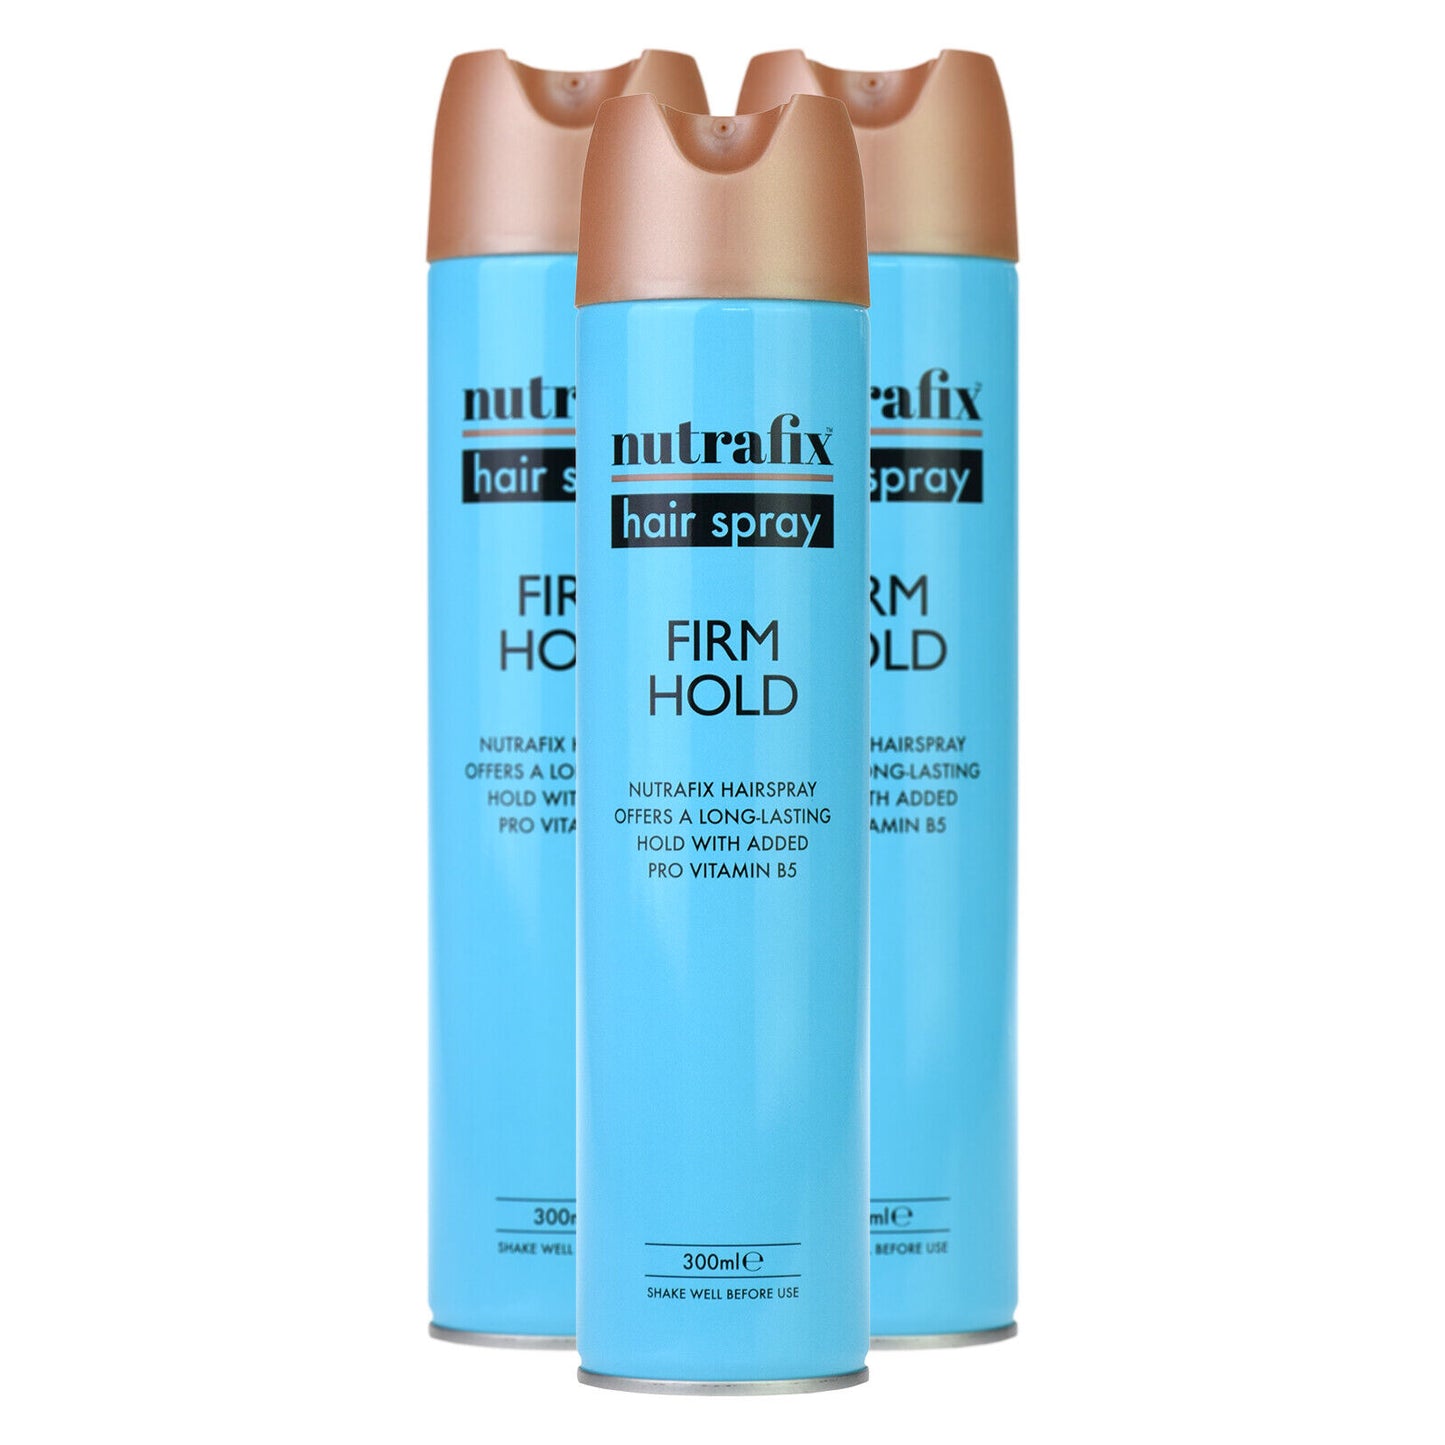 3x Nutrafix Firm Hold Hairspray (300ml)